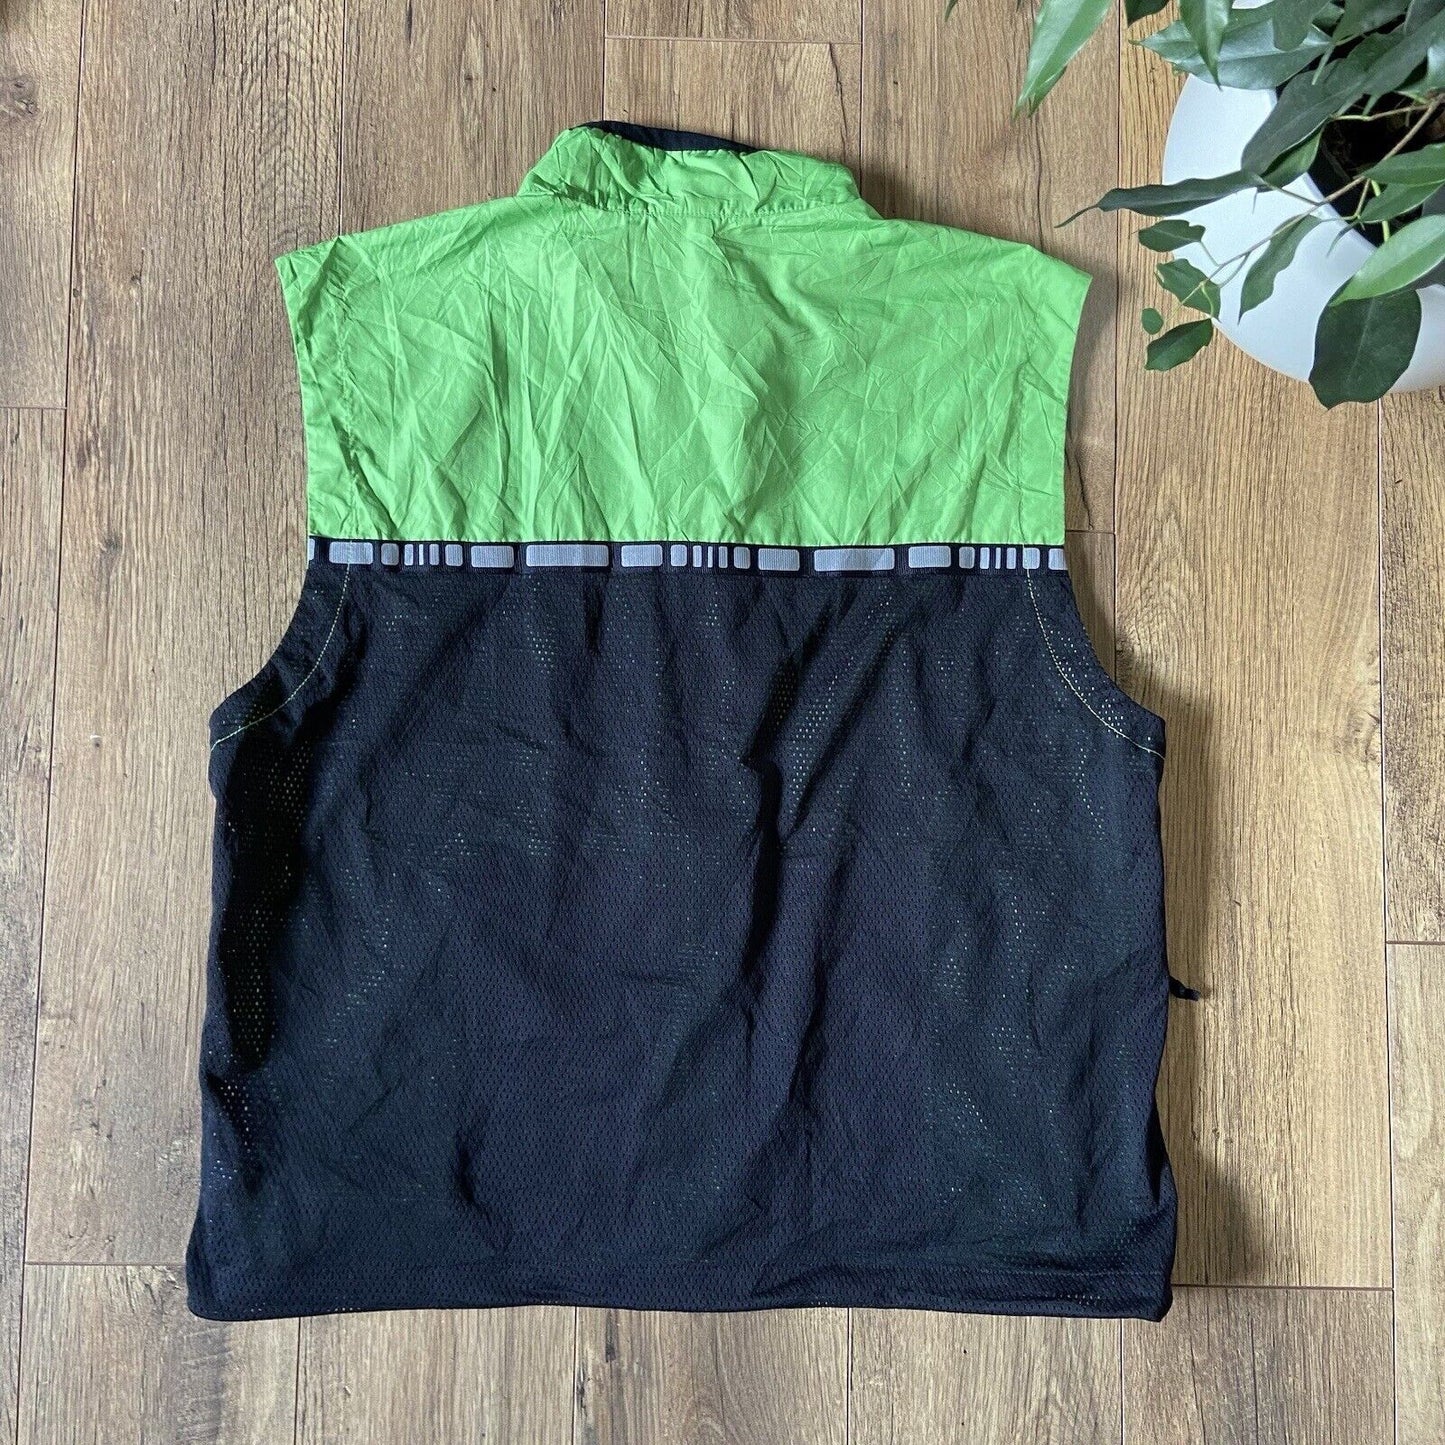 Vintage Nike Technical Running Vest Size L 90s Green Reflective